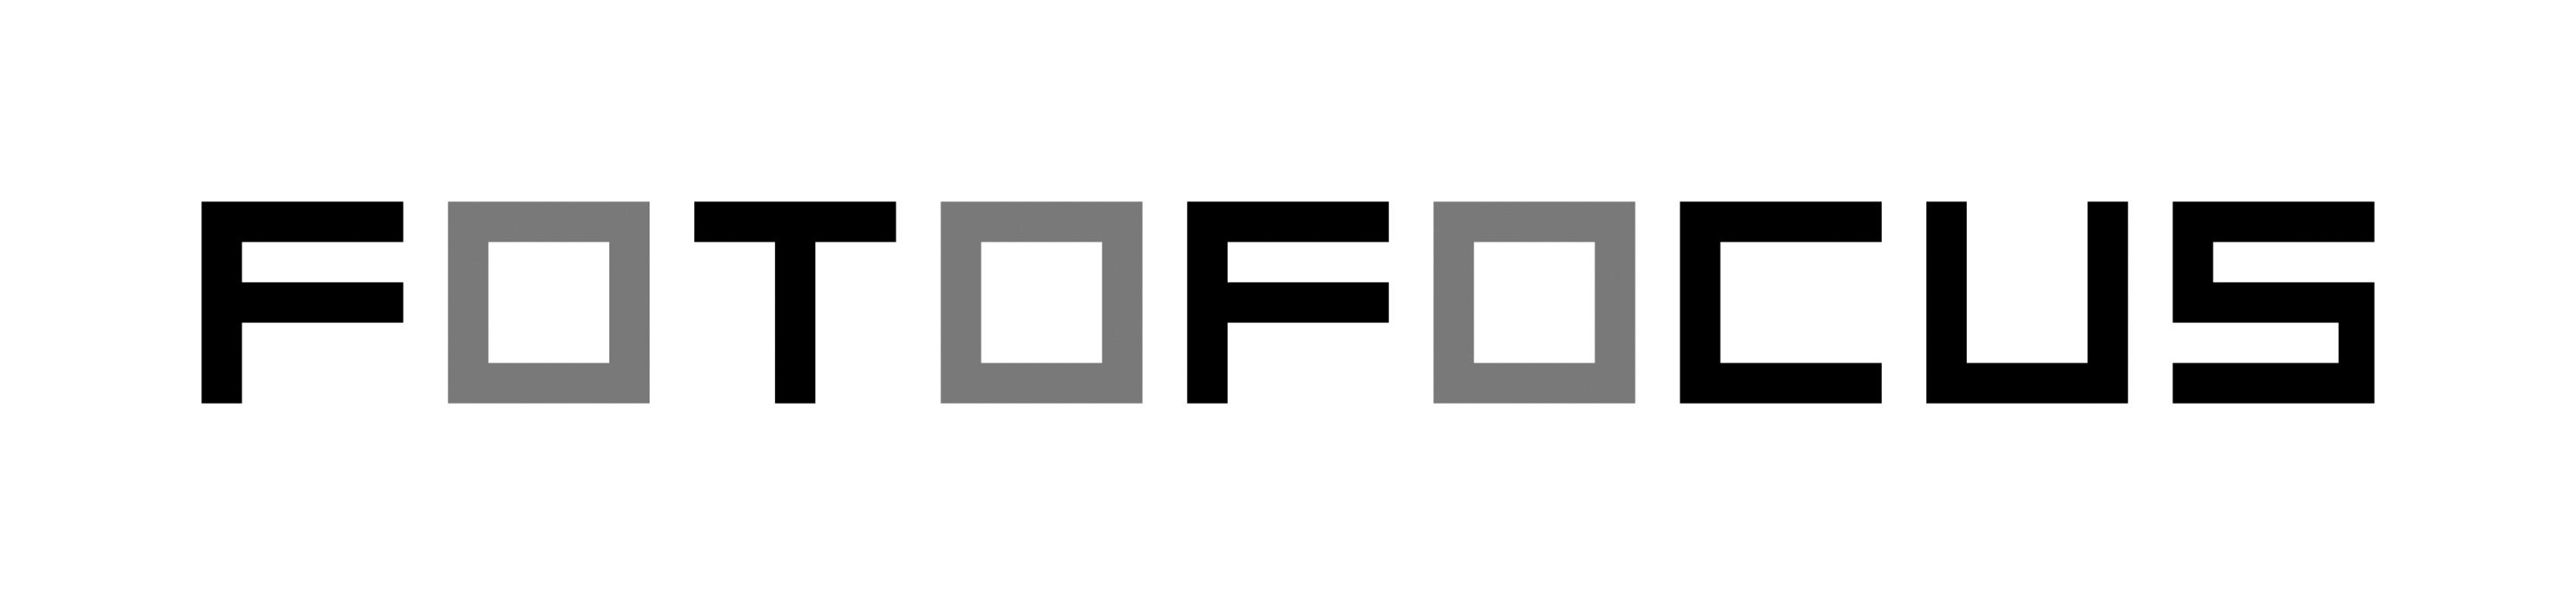 FotoFocus Logo - (horizontal).jpg